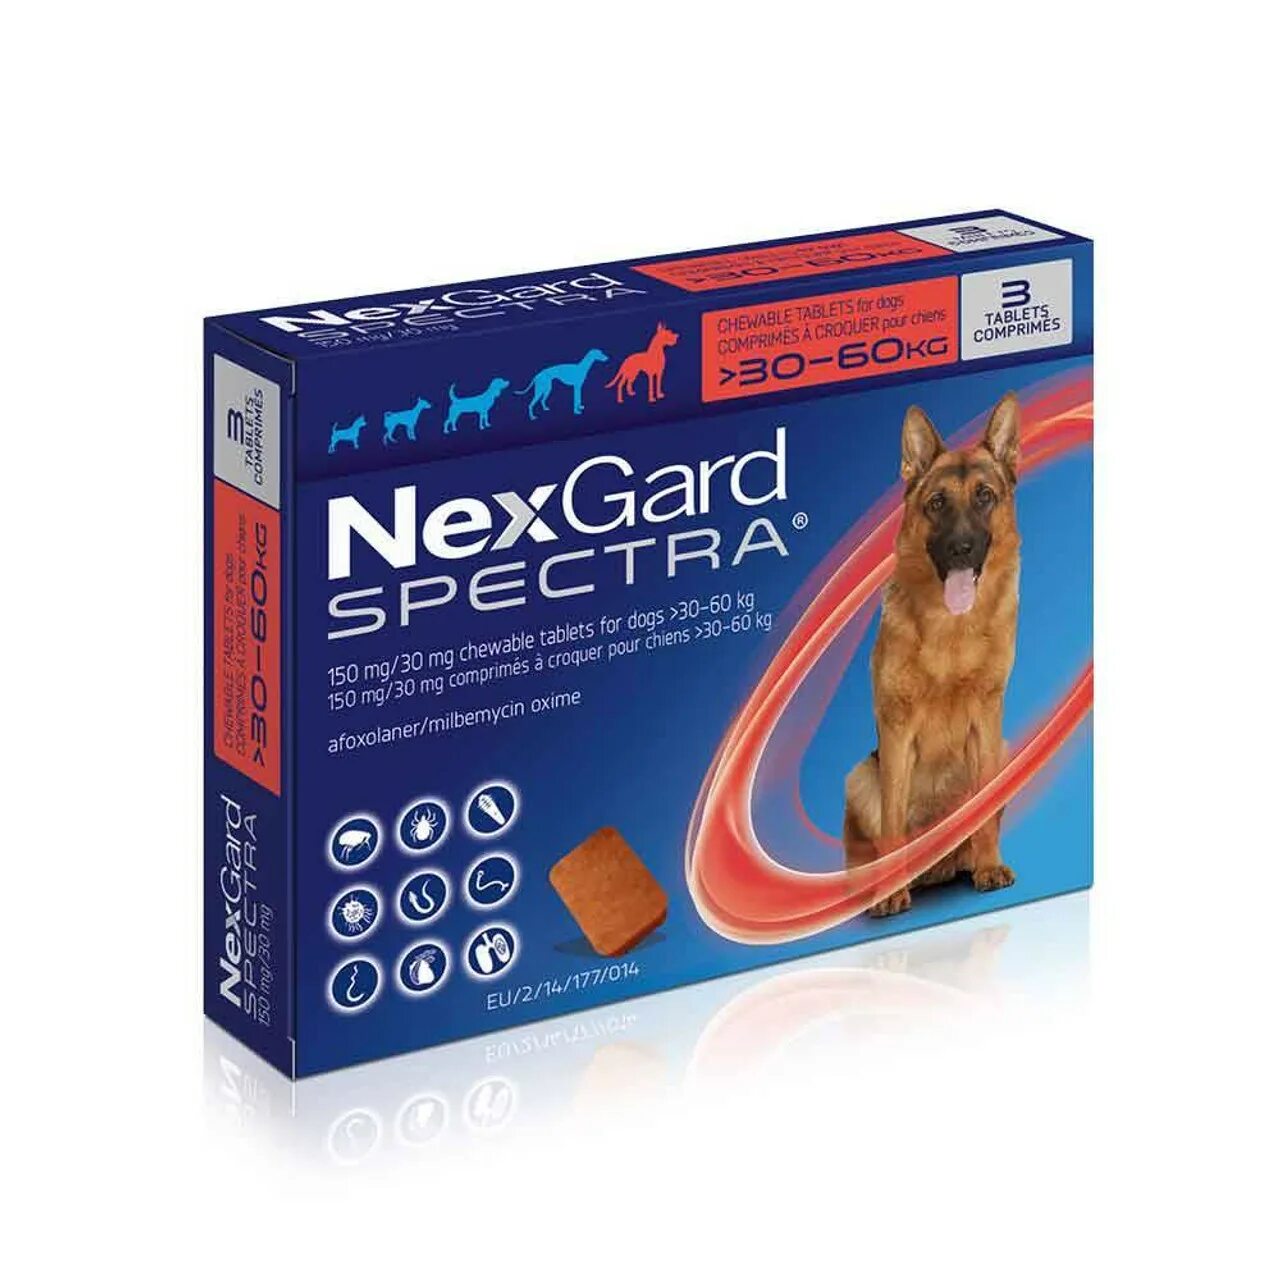 Купить таблетку от клещей нексгард. НЕКСГАРД спектра 30-60. НЕКСГАРД спектра XL. НЕКСГАРД спектра для собак 30-60. НЕКСГАРД спектра 60 кг.